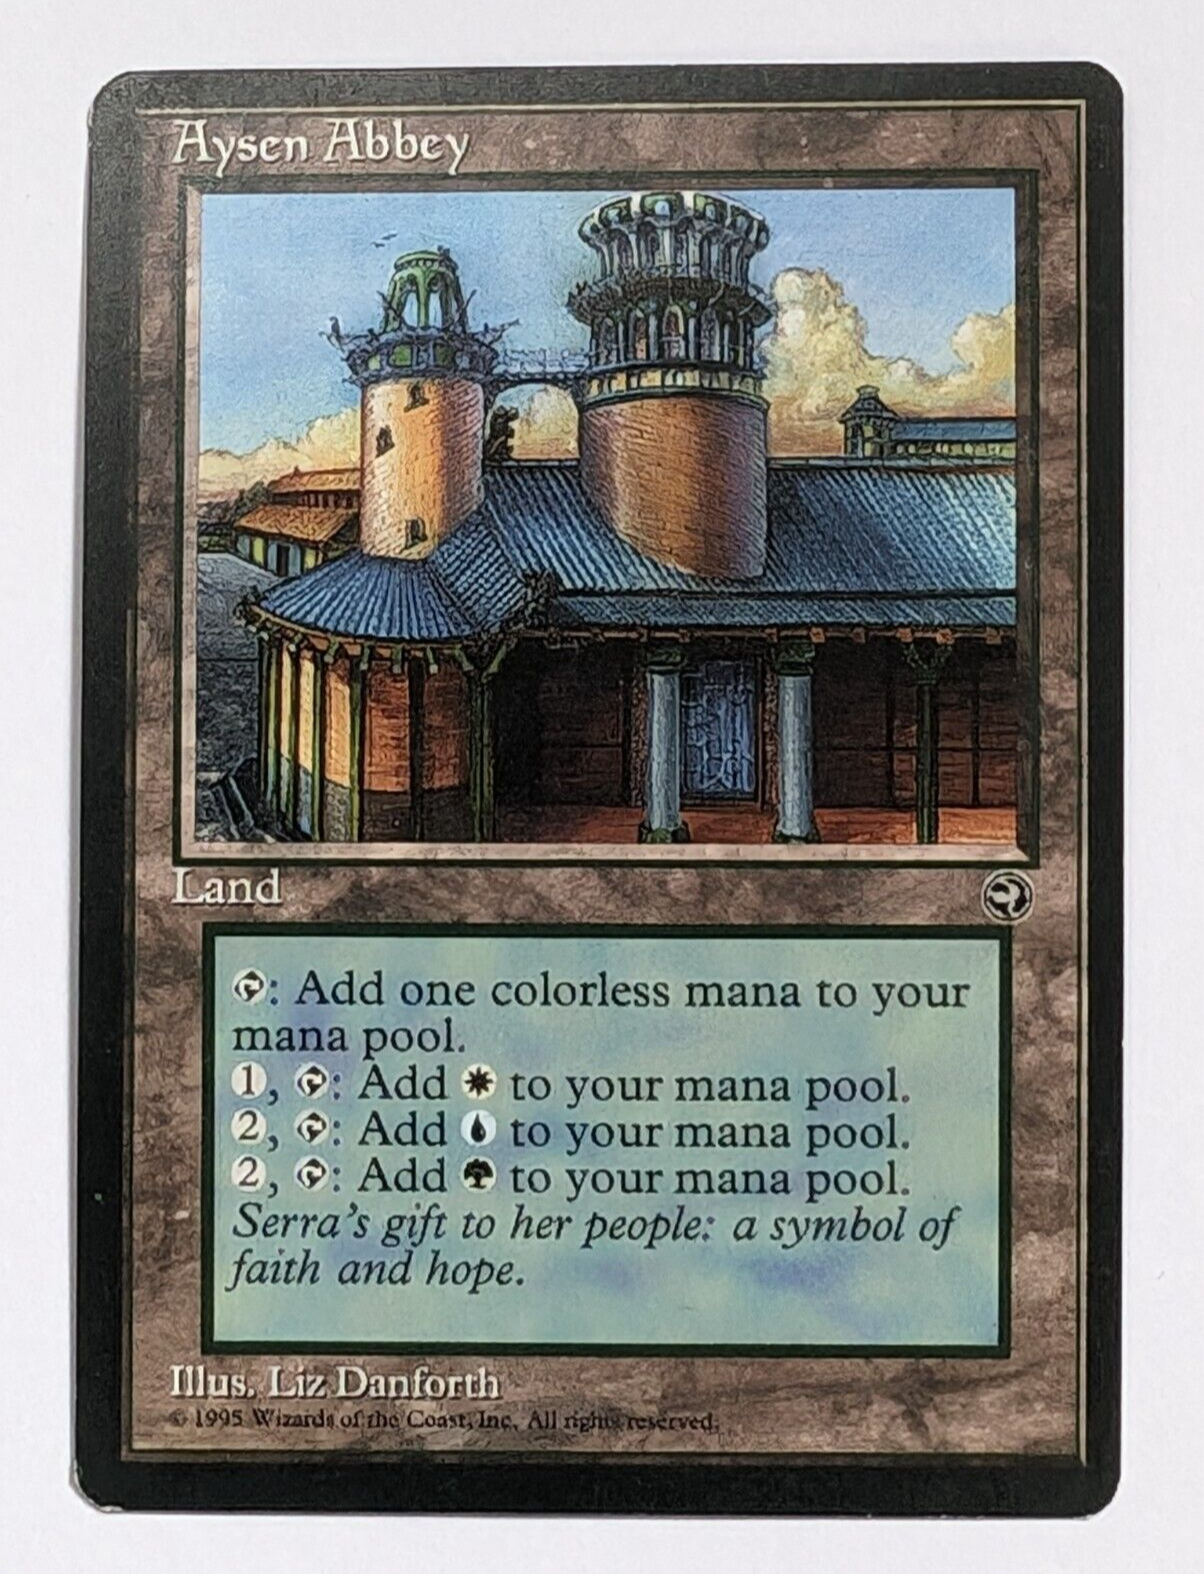 1995 AYSEN ABBEY MAGIC THE GATHERING LAND MTG GAME TRADING CARD VINTAGE RETRO - $6.99